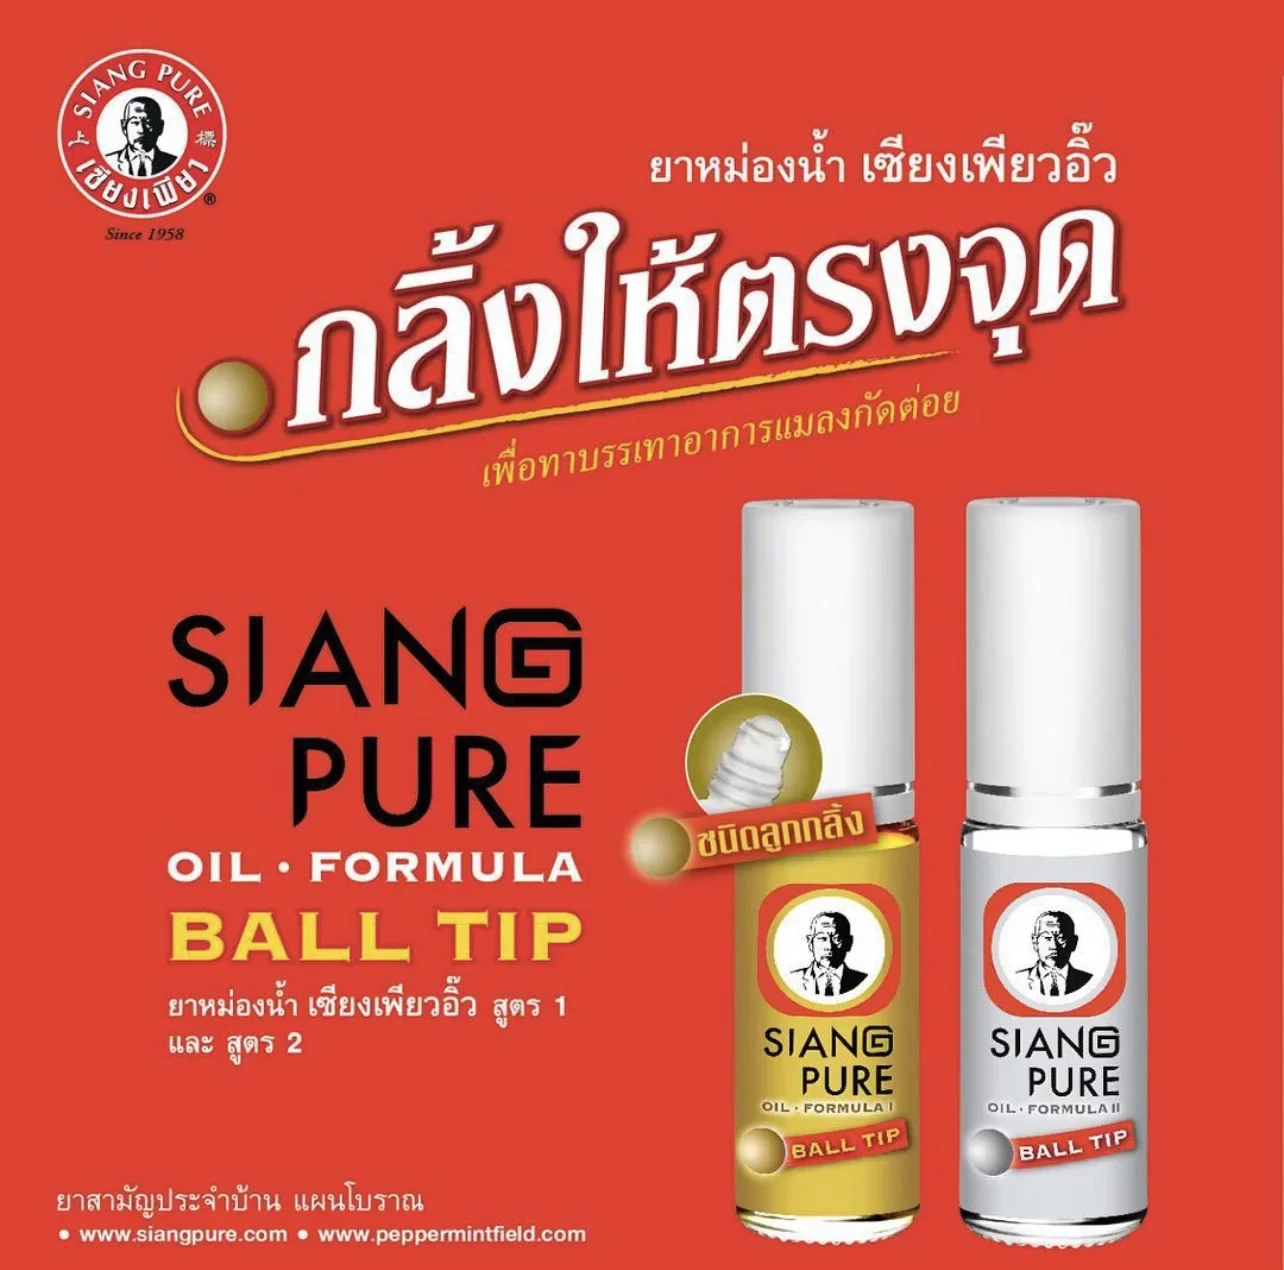 Siang pure oil formula ball tip 3ML -100% original from thailand